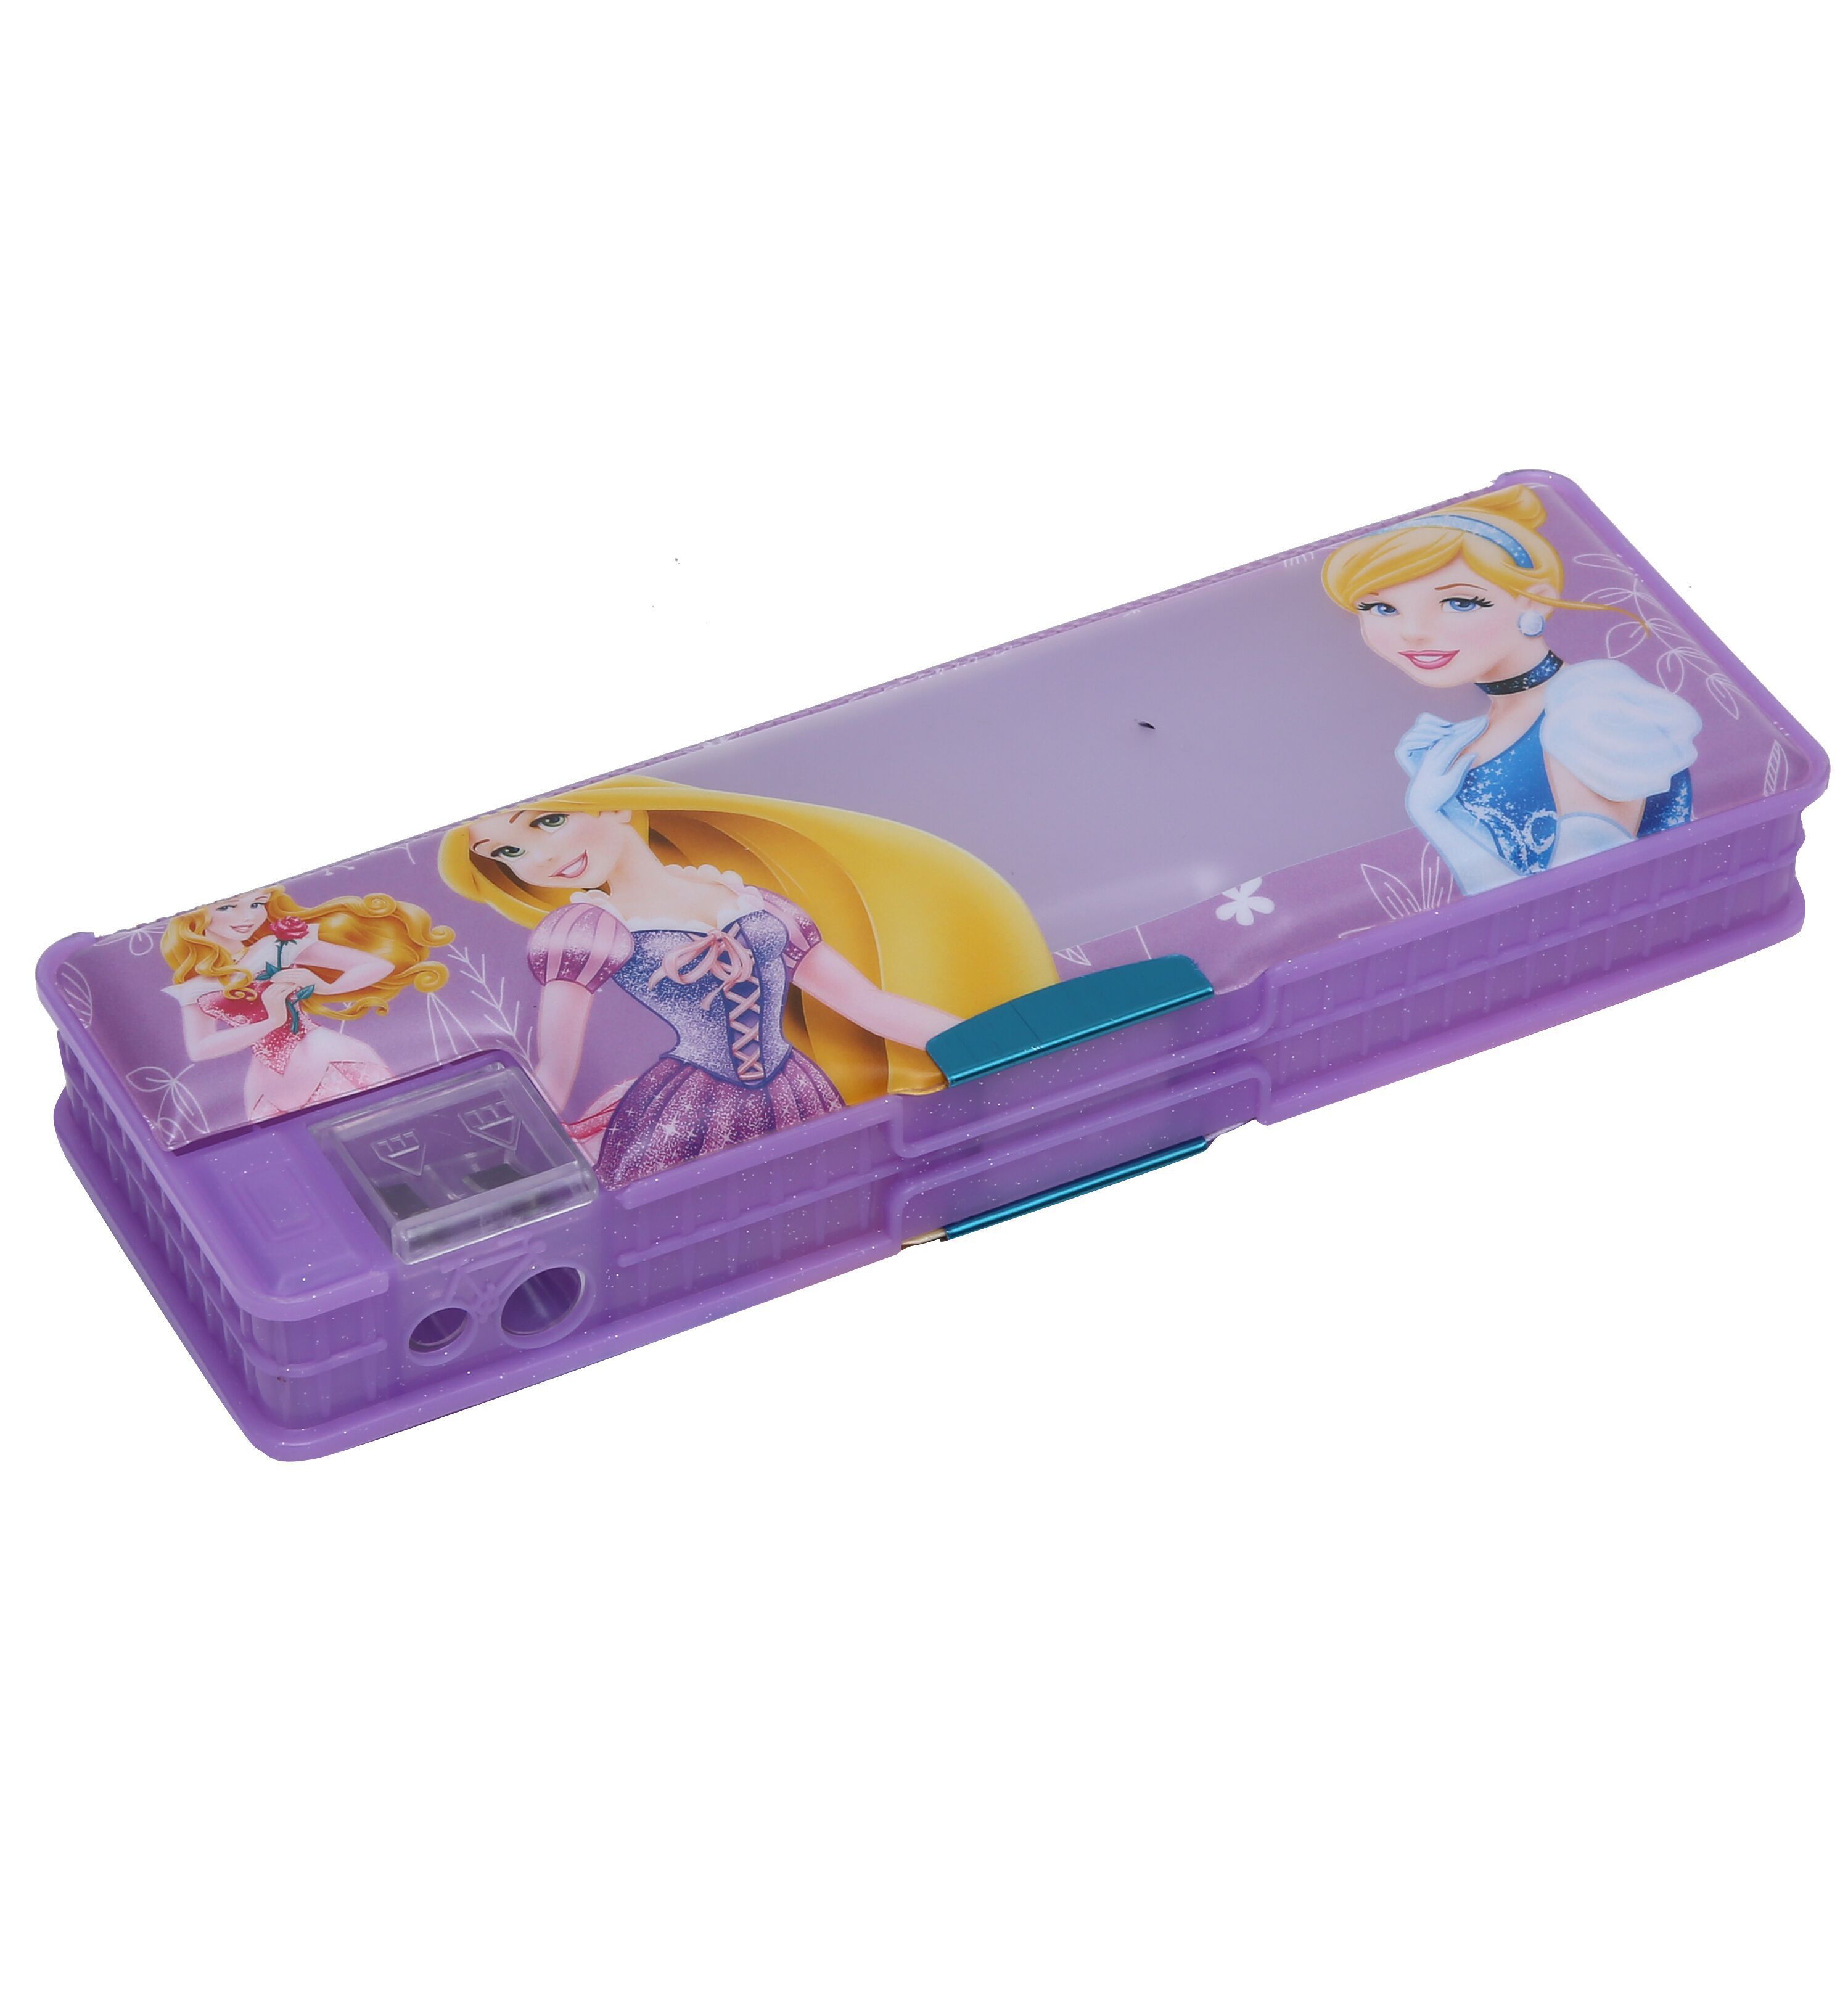 Wimbley Disney Princess Pencil Box Pencil Box With Sharpener For